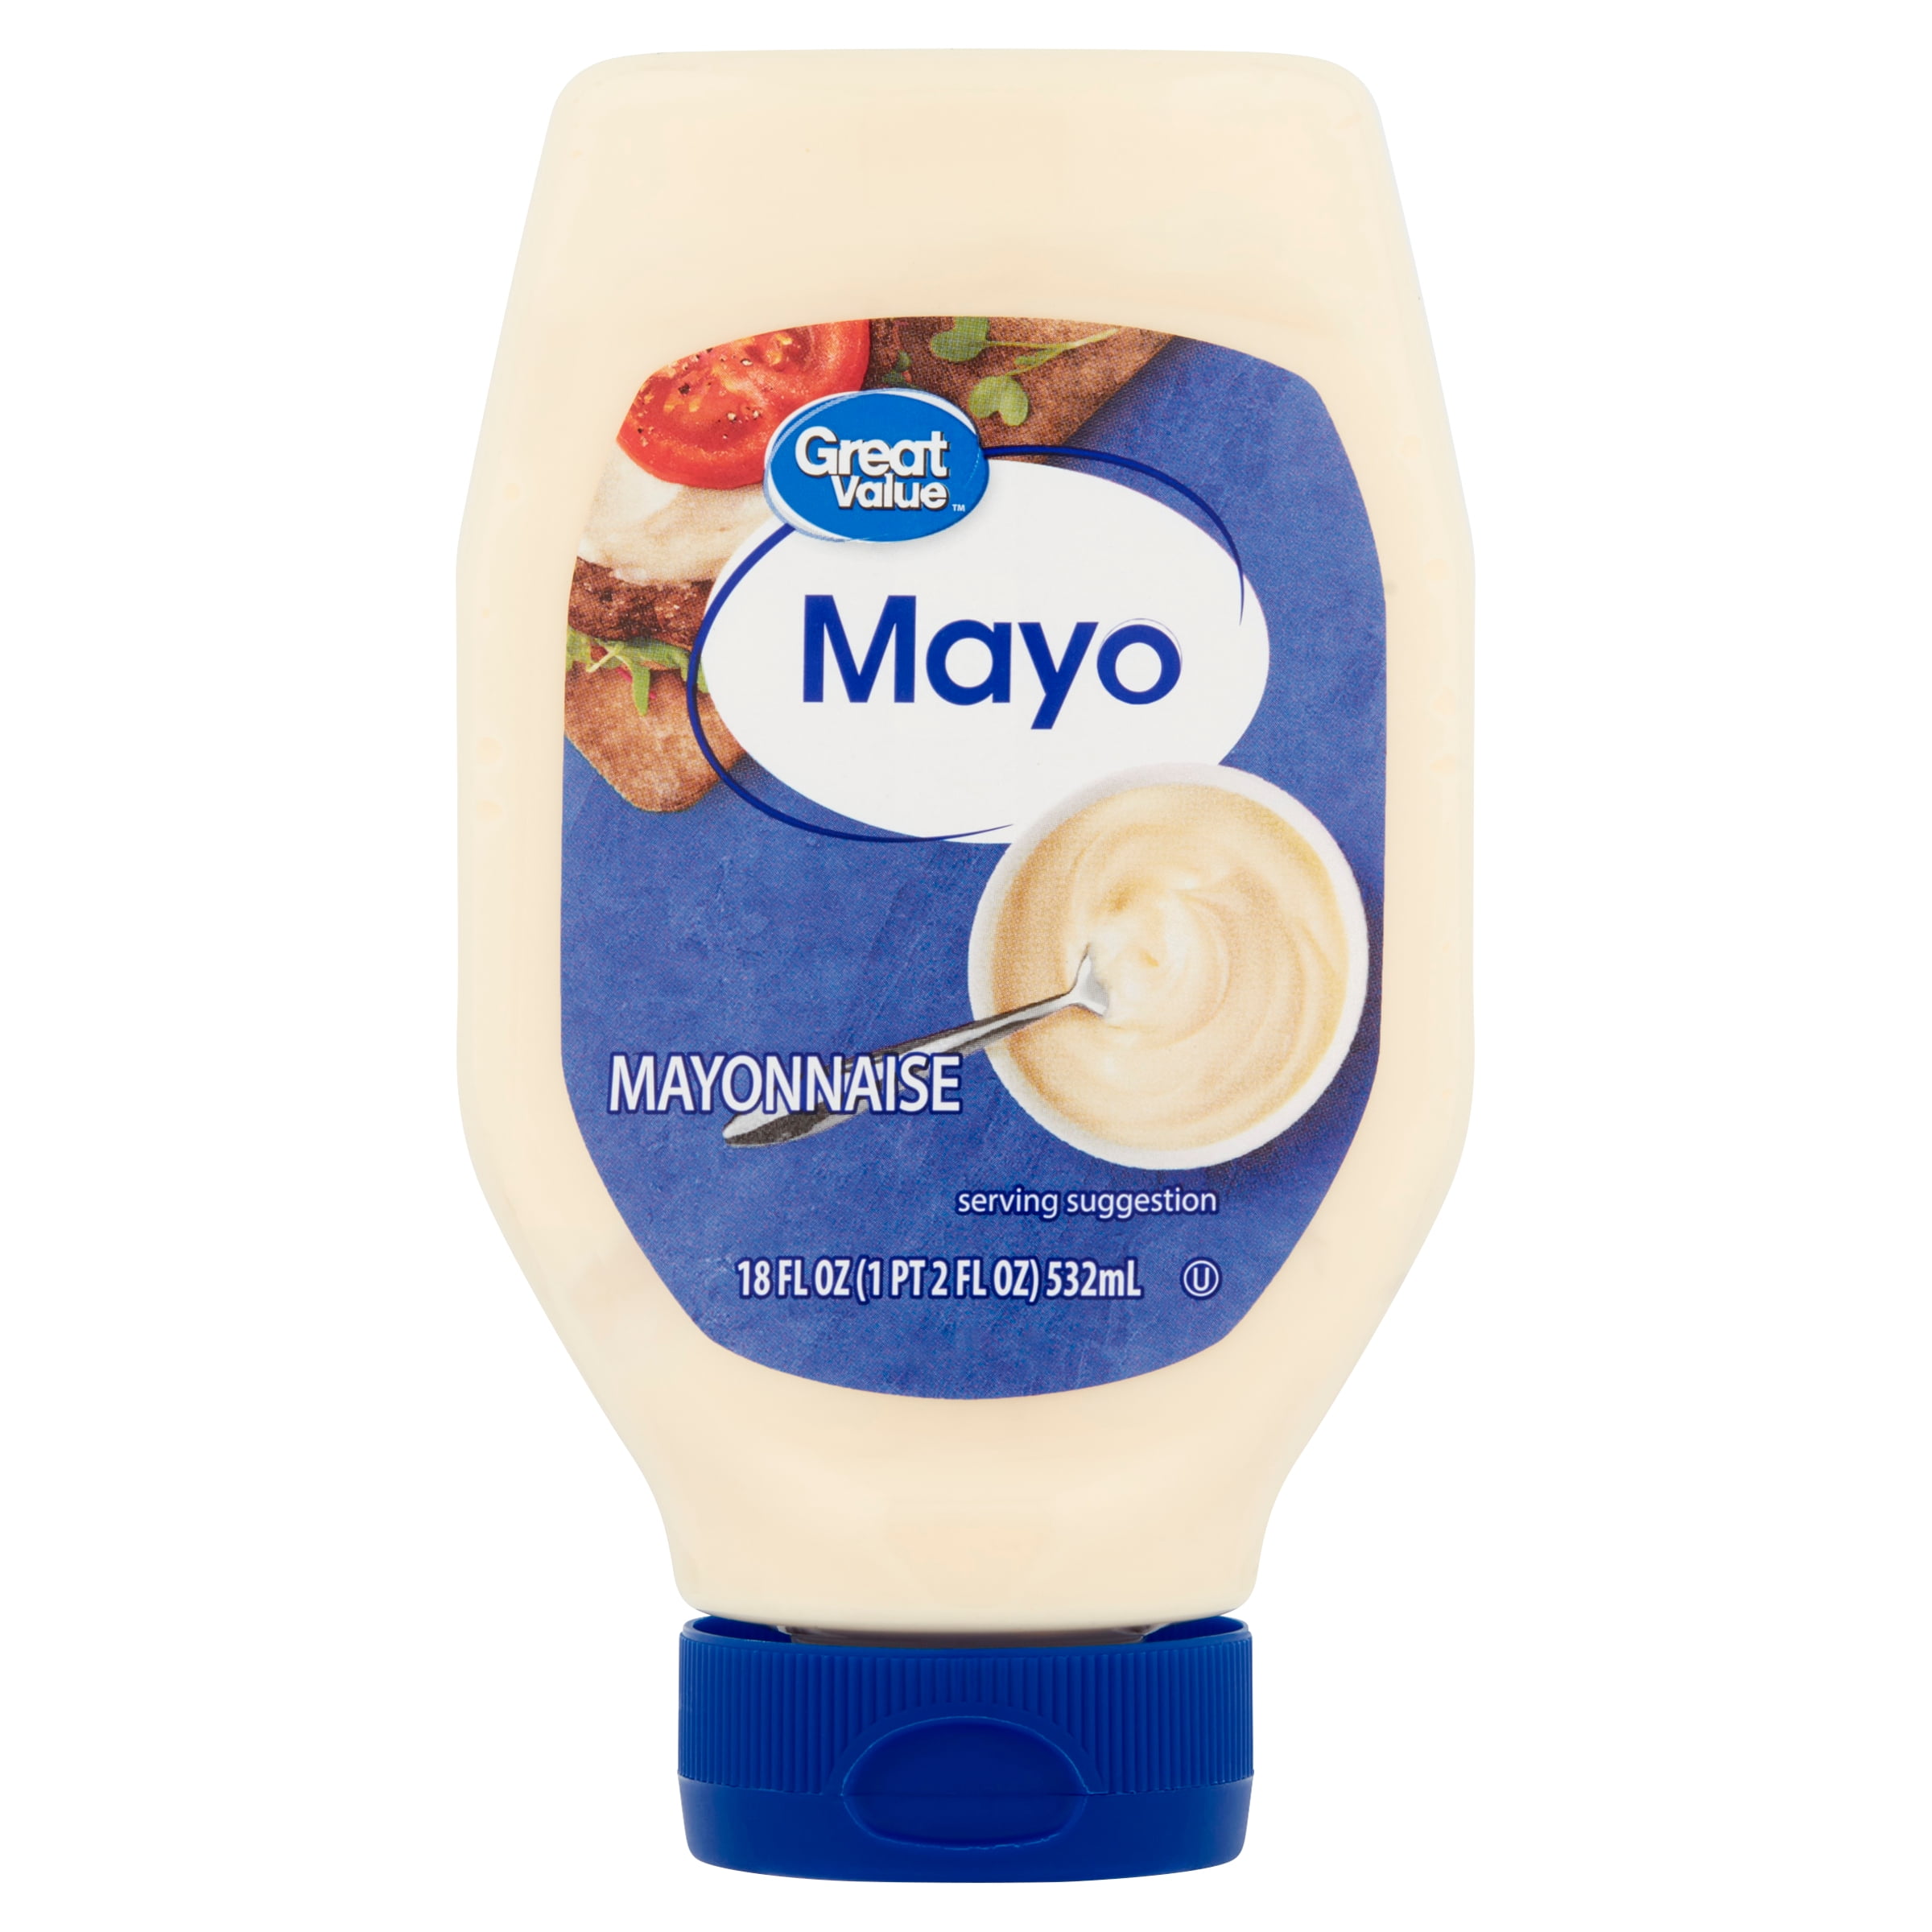 Miracle Whip Mayo-like Dressing Squeeze Bottle, 19 fl oz